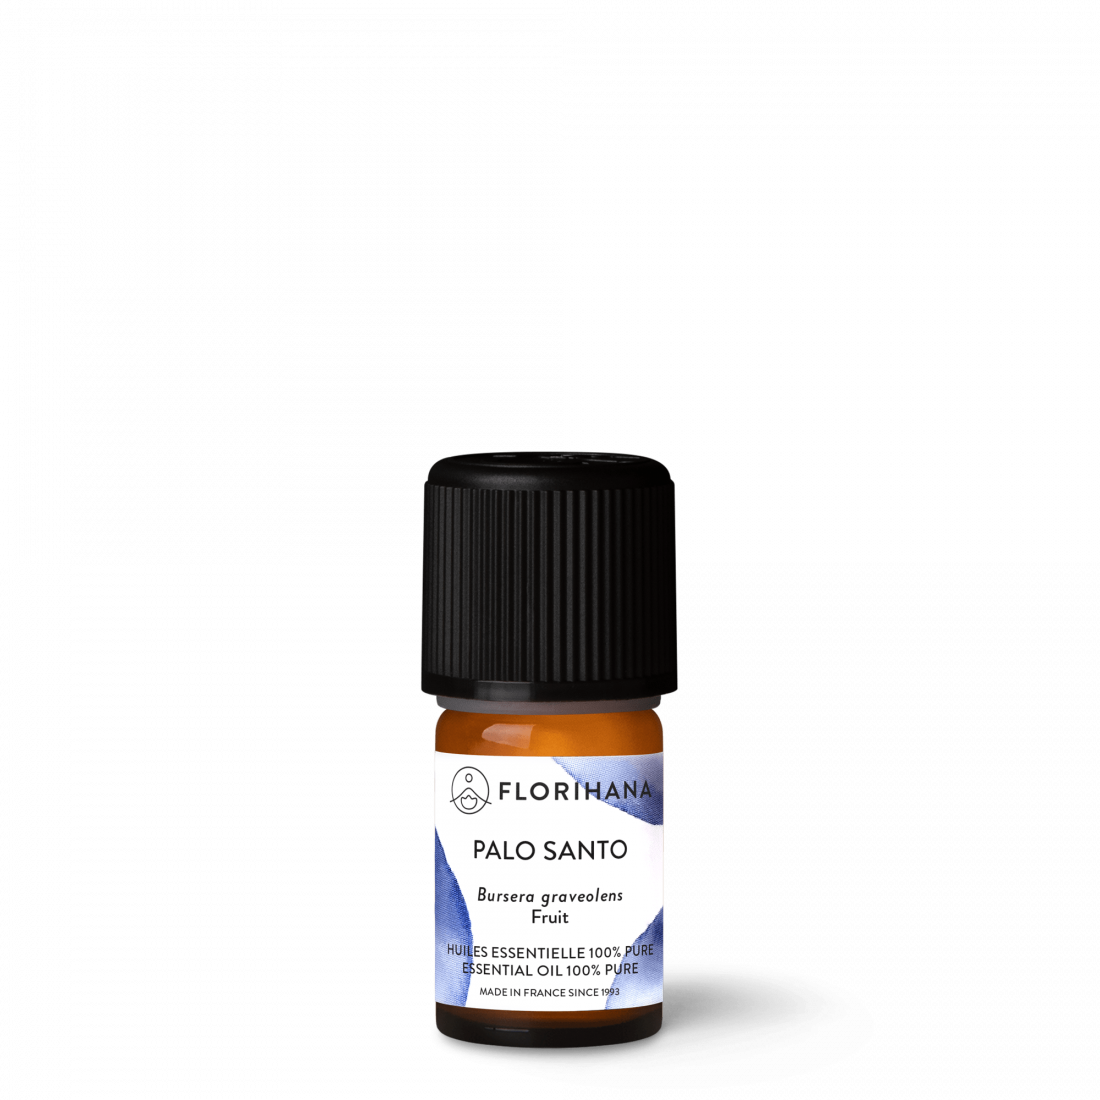 PALOSANTO - Palo Santo Essential Oil from Perù - Seleccion - Pure Organic  Essential Oils for Diffuser - Palo Santo Oil Ideal for Aromatherapy and